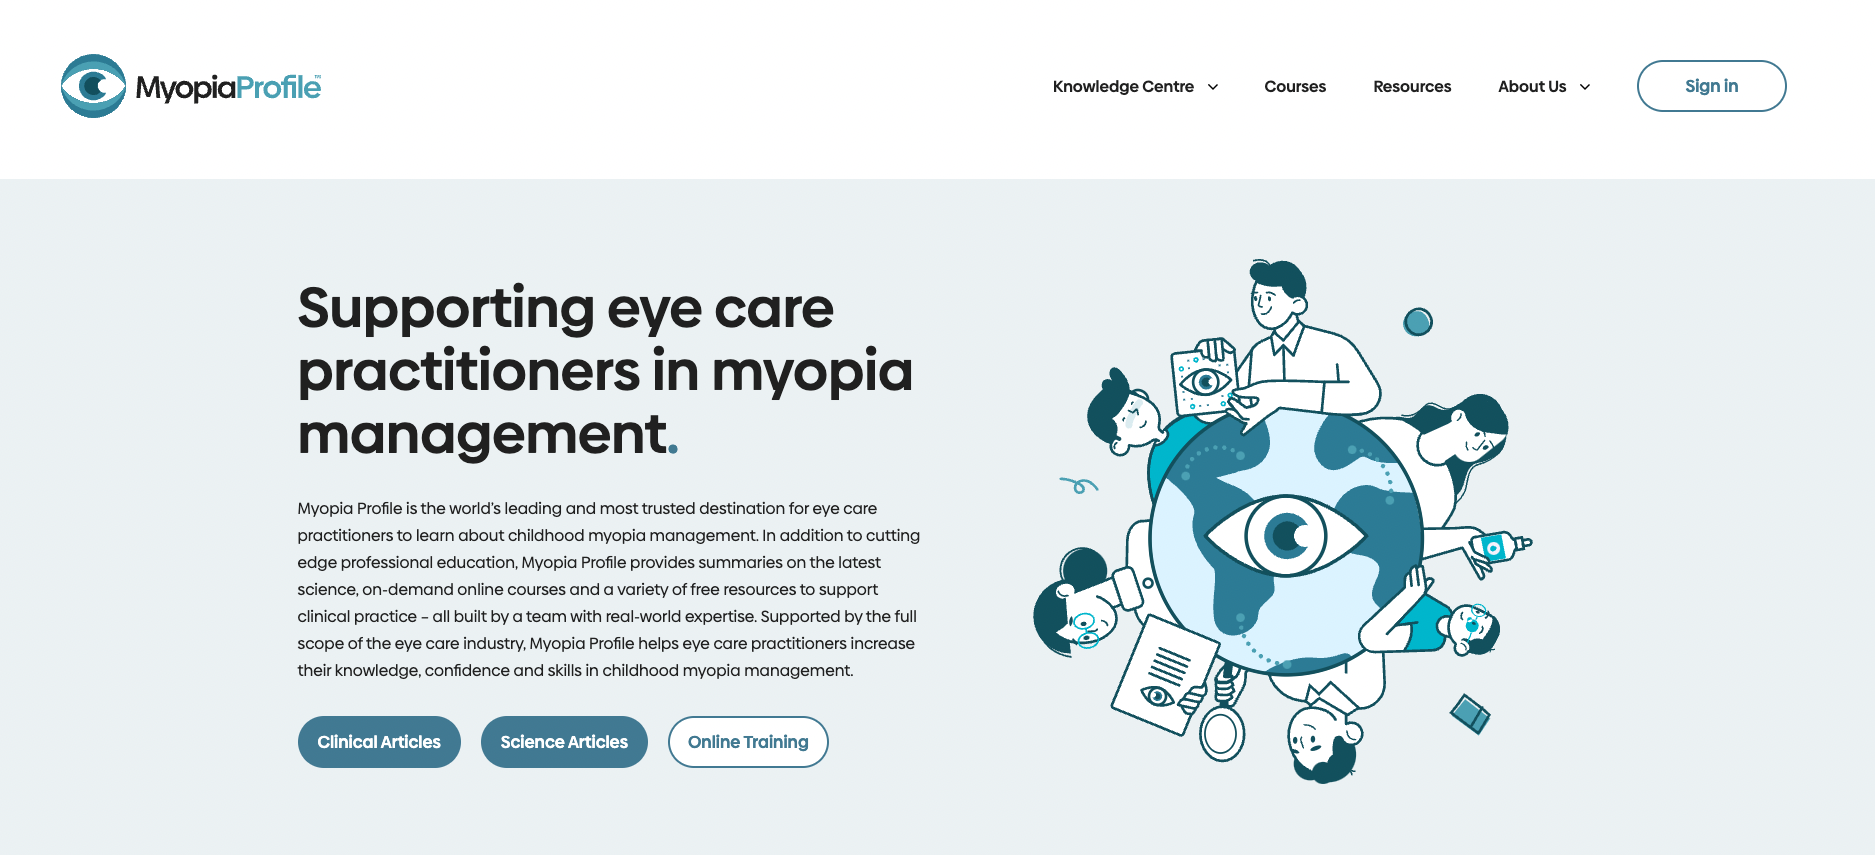 New Myopia Profile Website Offers  Enhanced Educational Resources